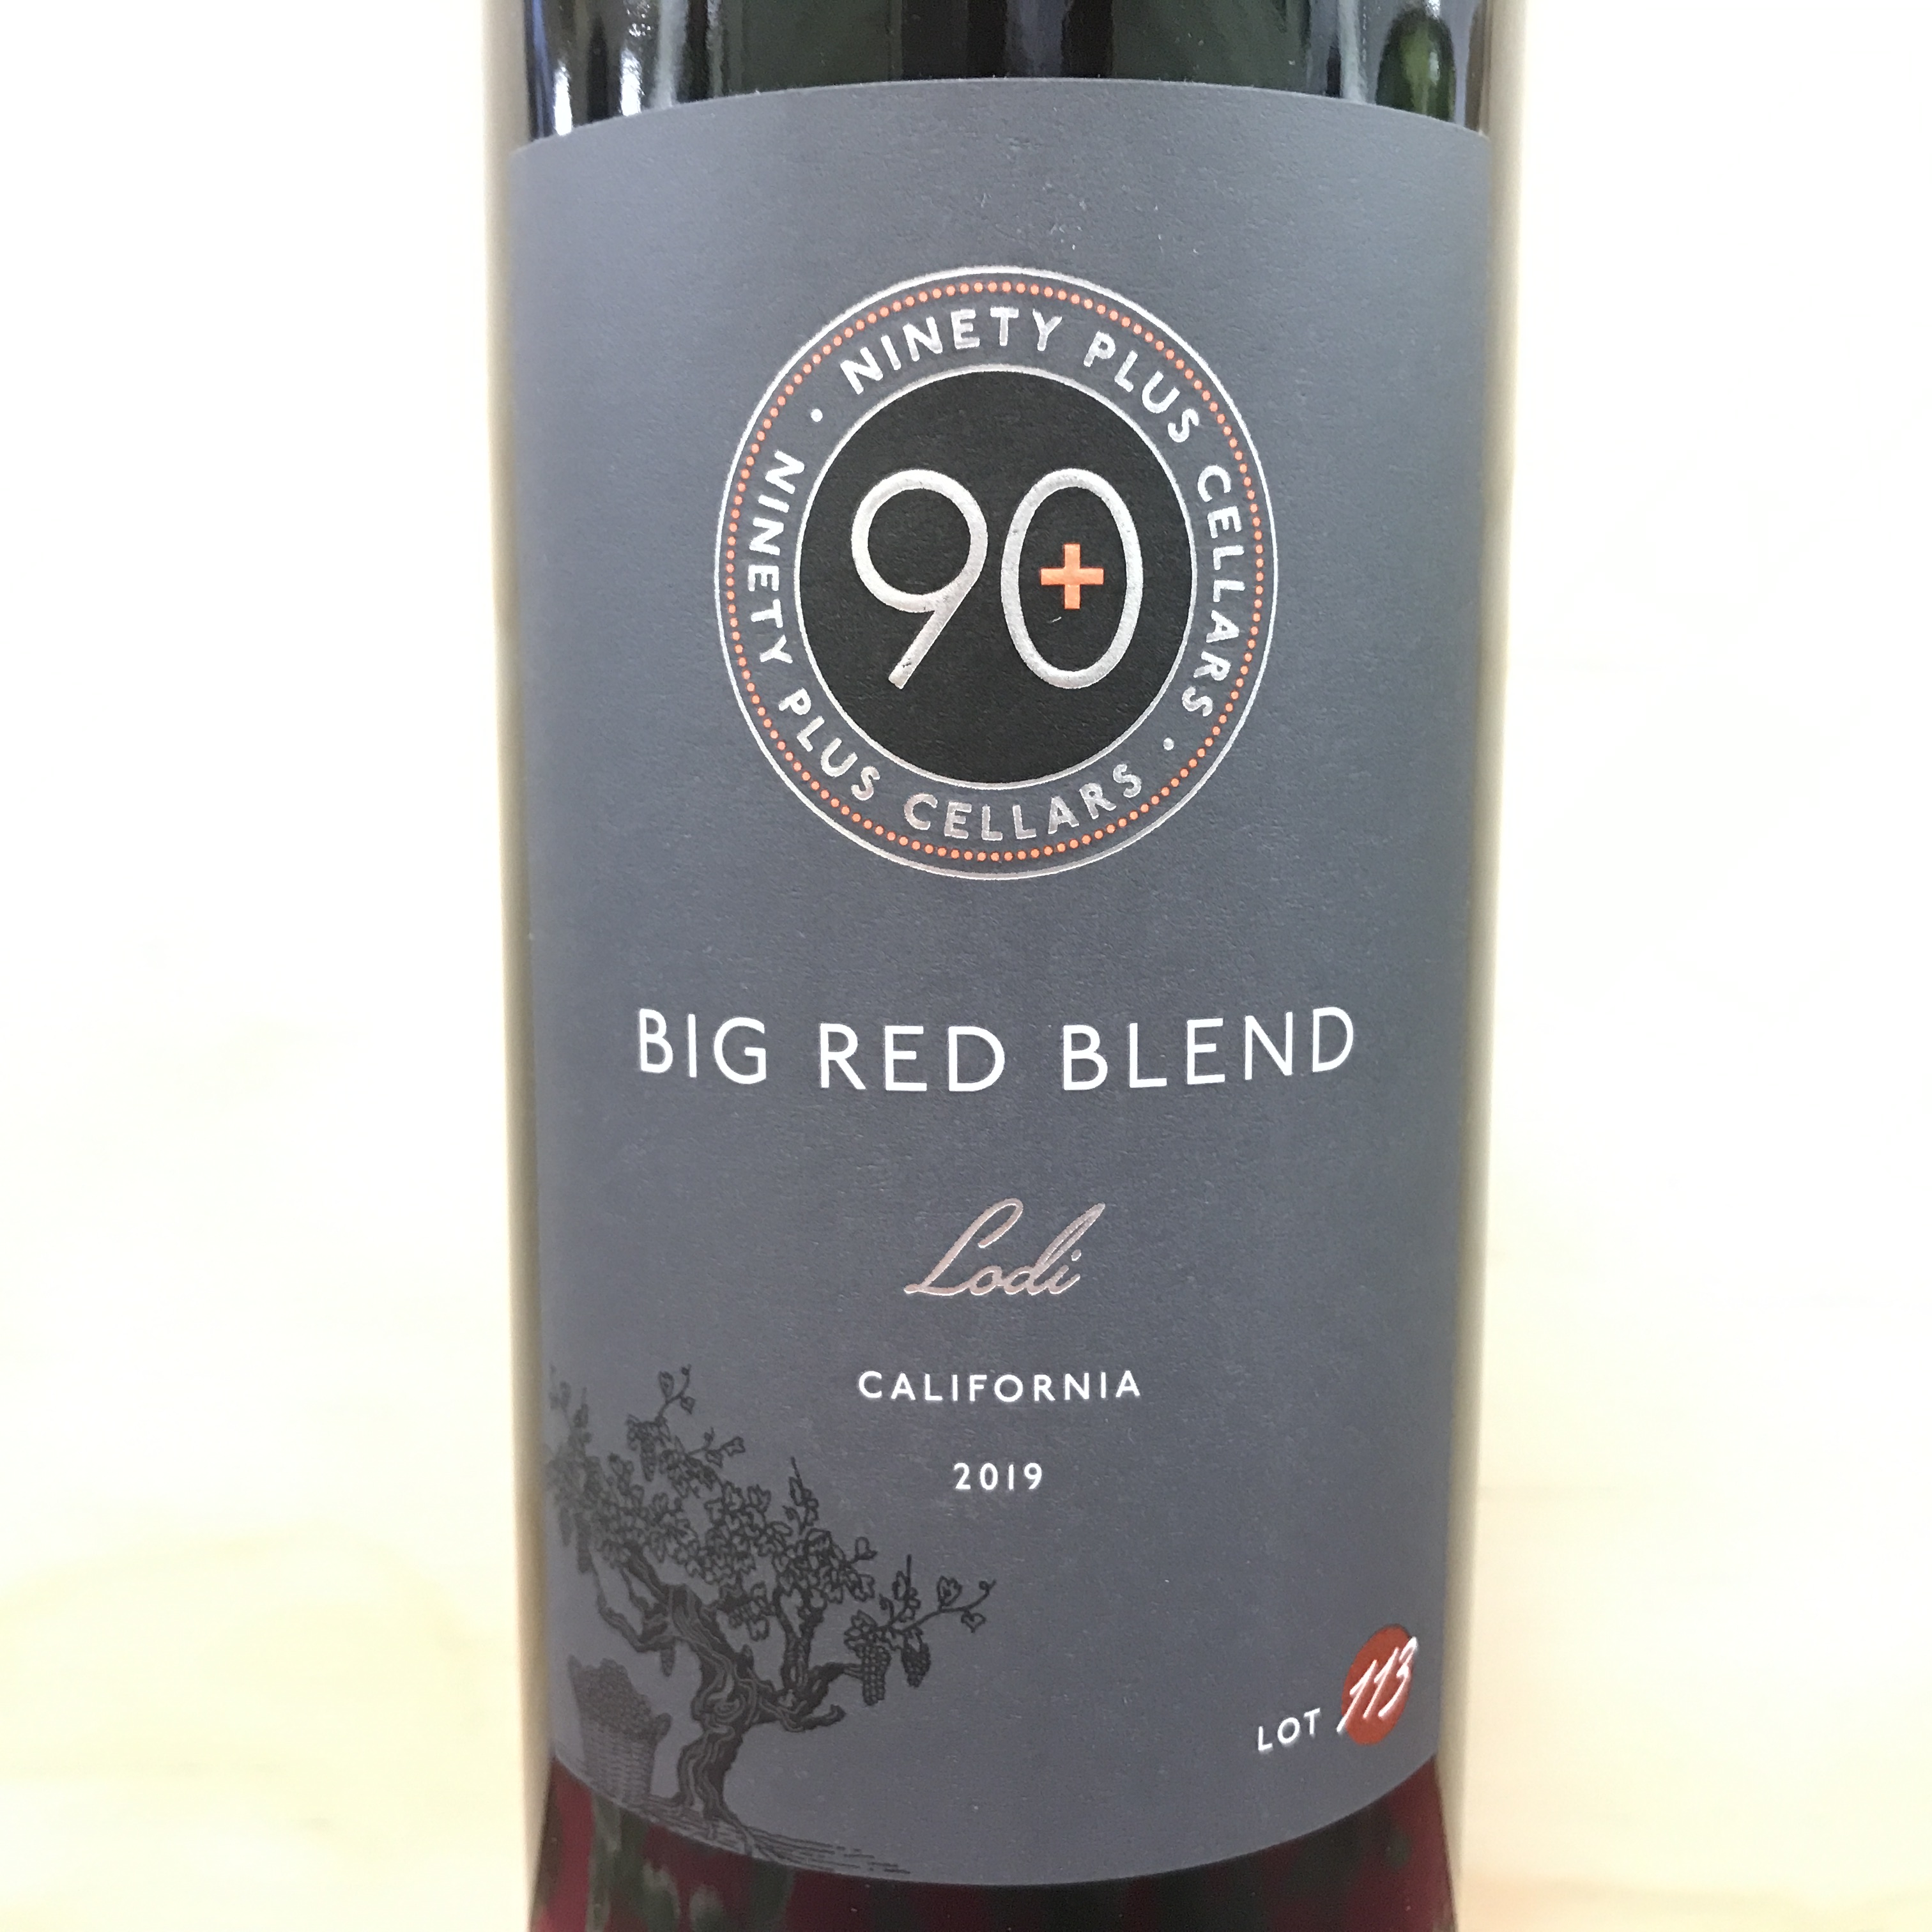 90+ Cellars Big Red Blend Lodi 2020 Lot 113